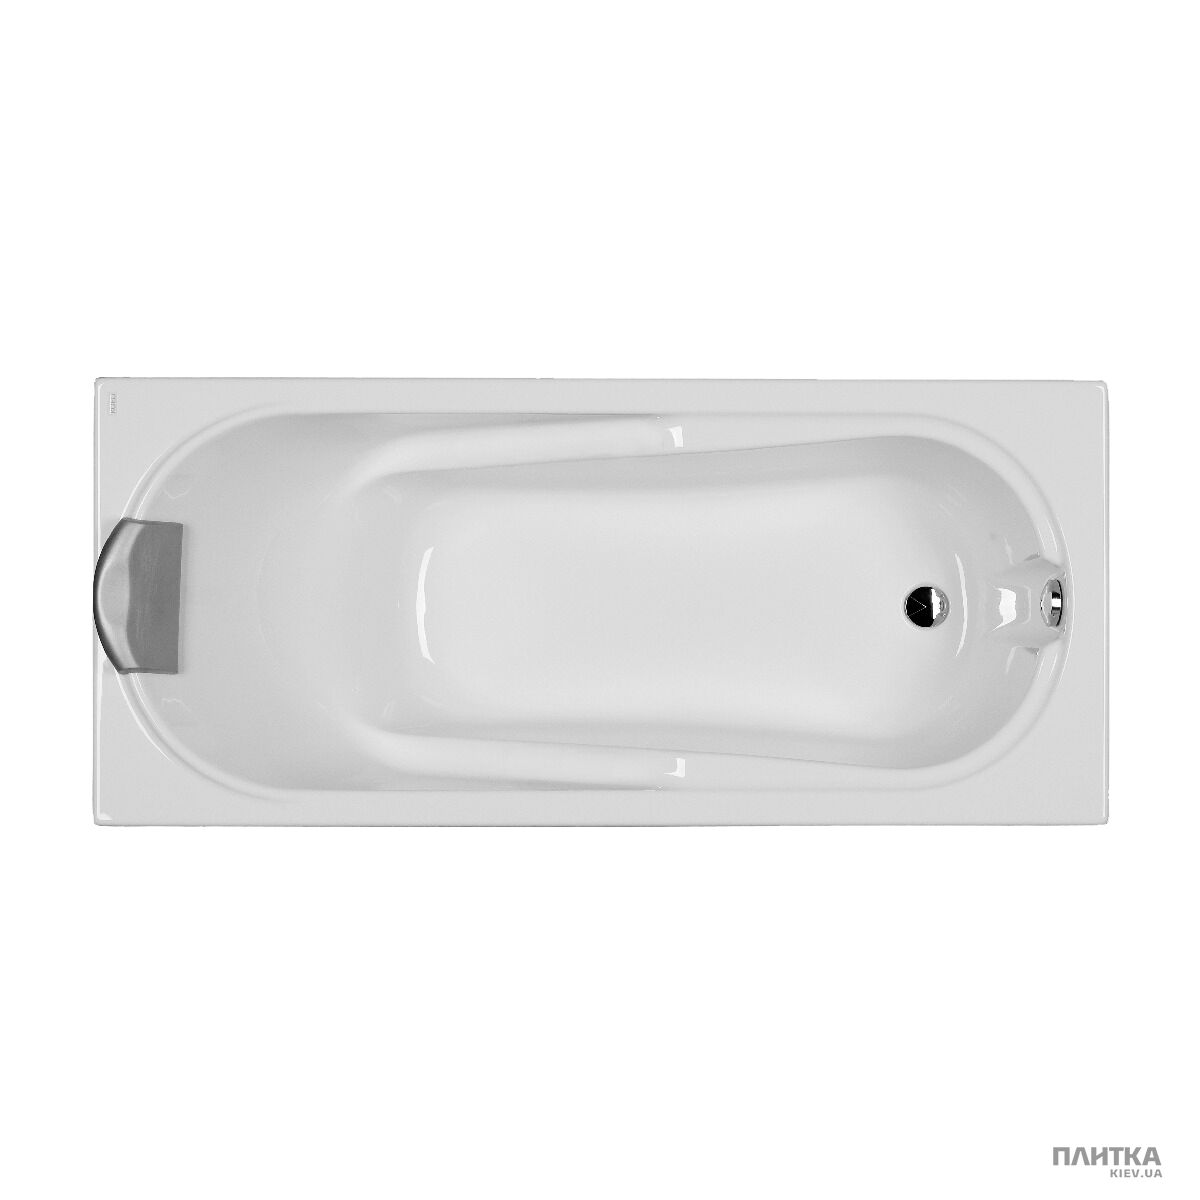 Акрилова ванна Kolo Comfort XWP307000G COMFORT 170 UA прямокутна ванна 170 x 75 см в комплекті з сифоном Geberit 150.520.21.1. білий